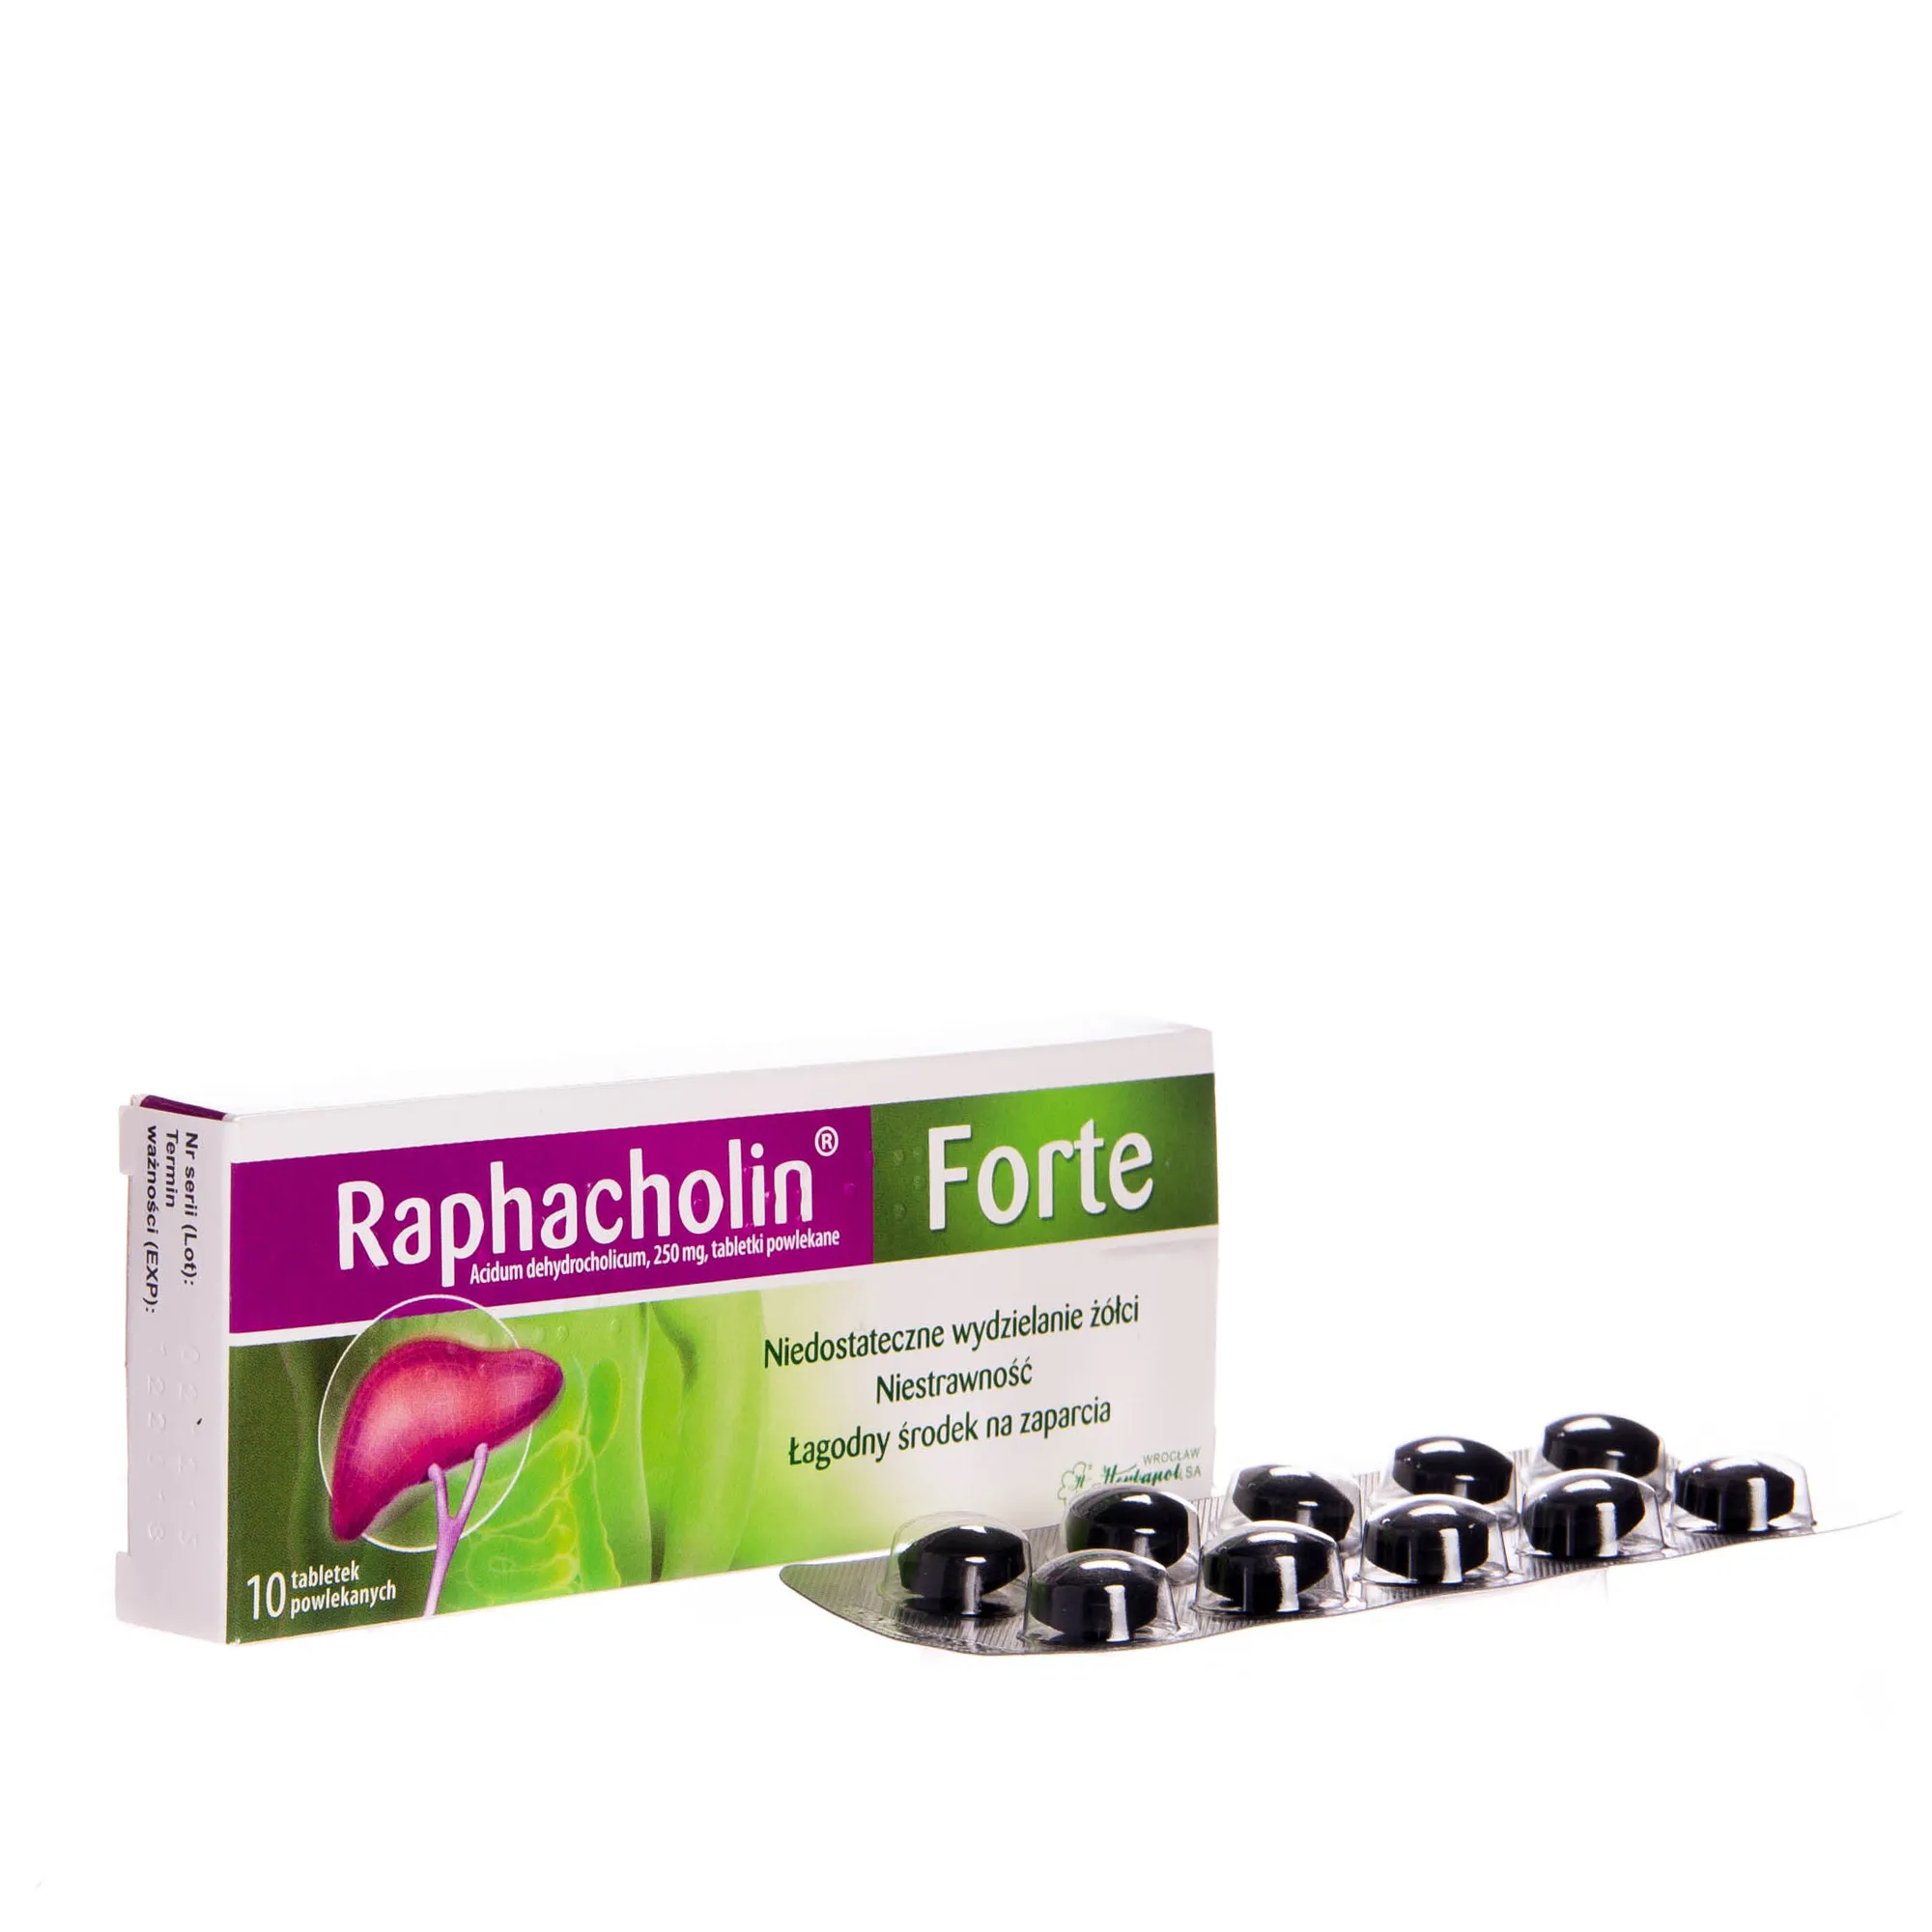 Raphacholin Forte, Acidum dehydrolicum, 250 mg,10 tabletek powlekanych